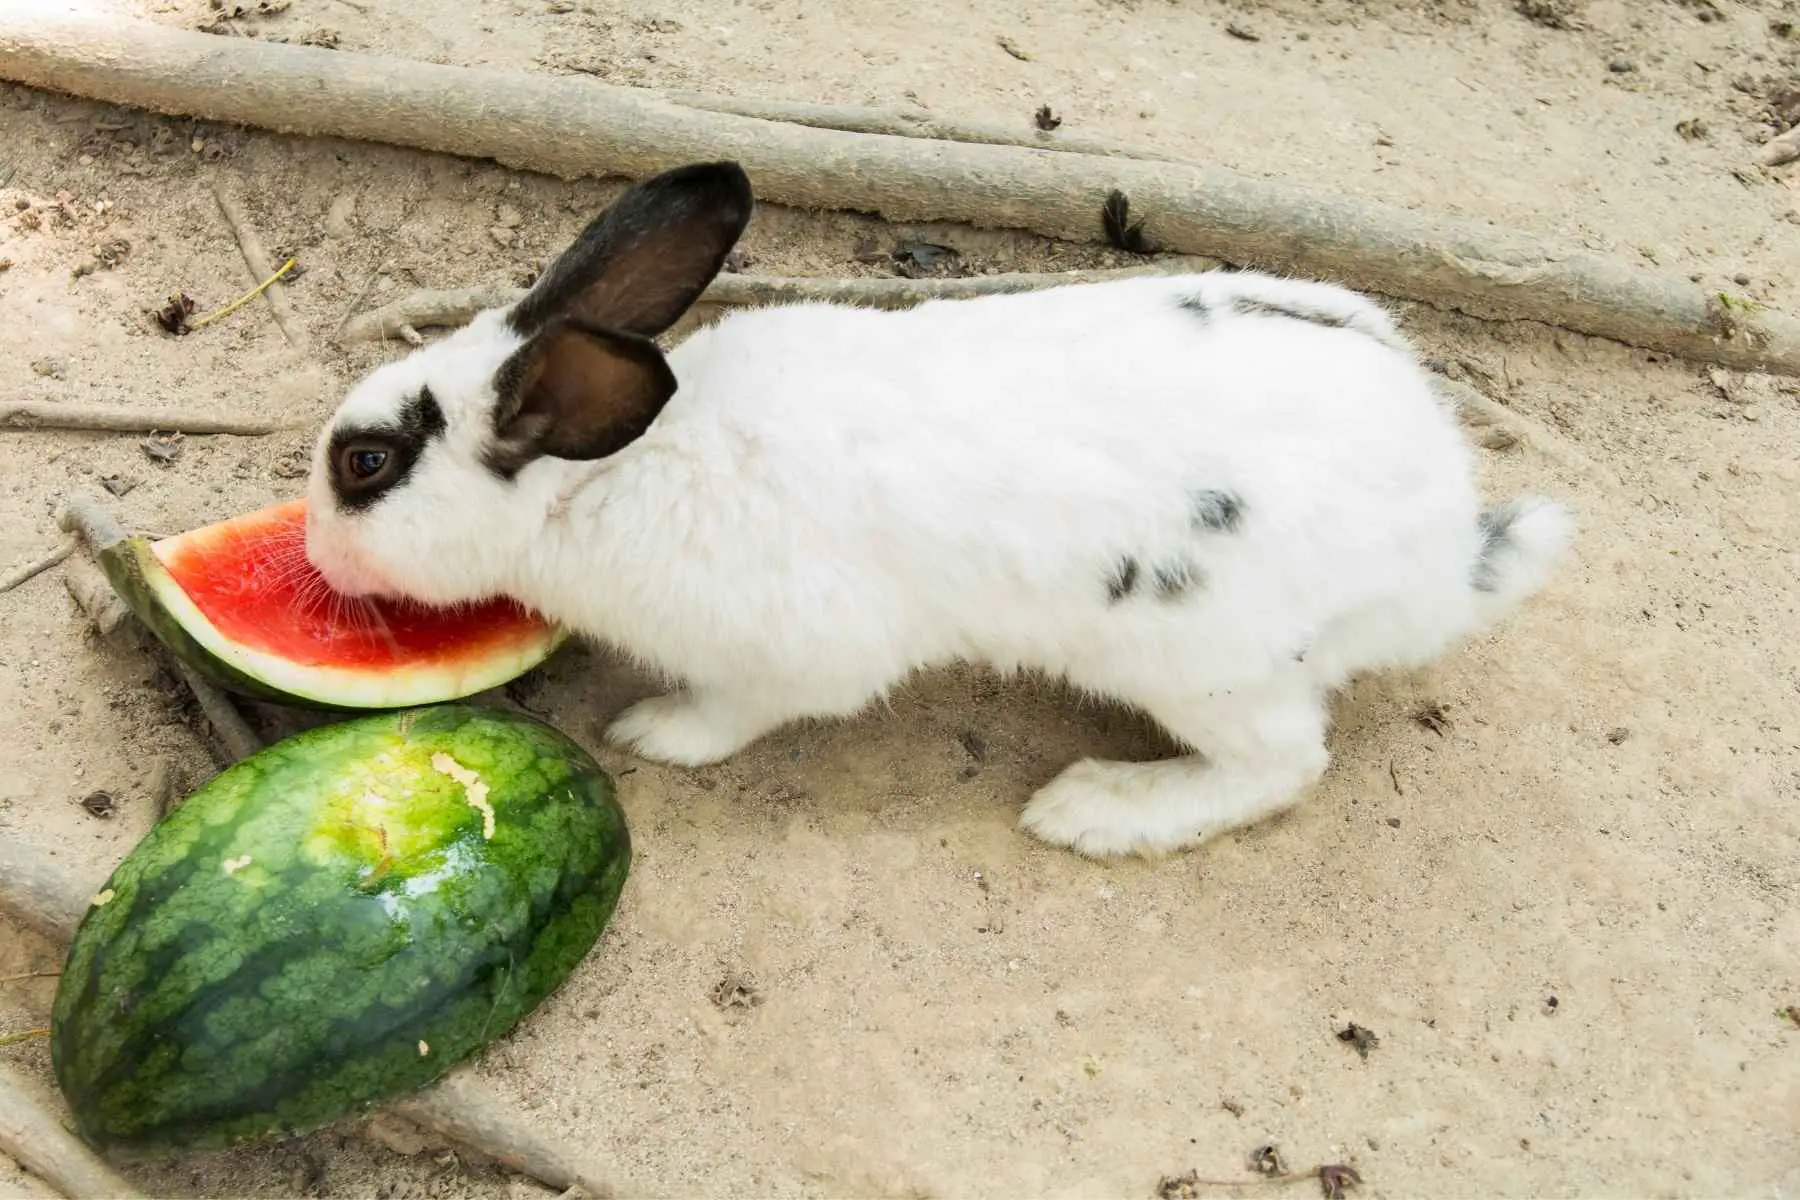 Rabbit eating a watermelon